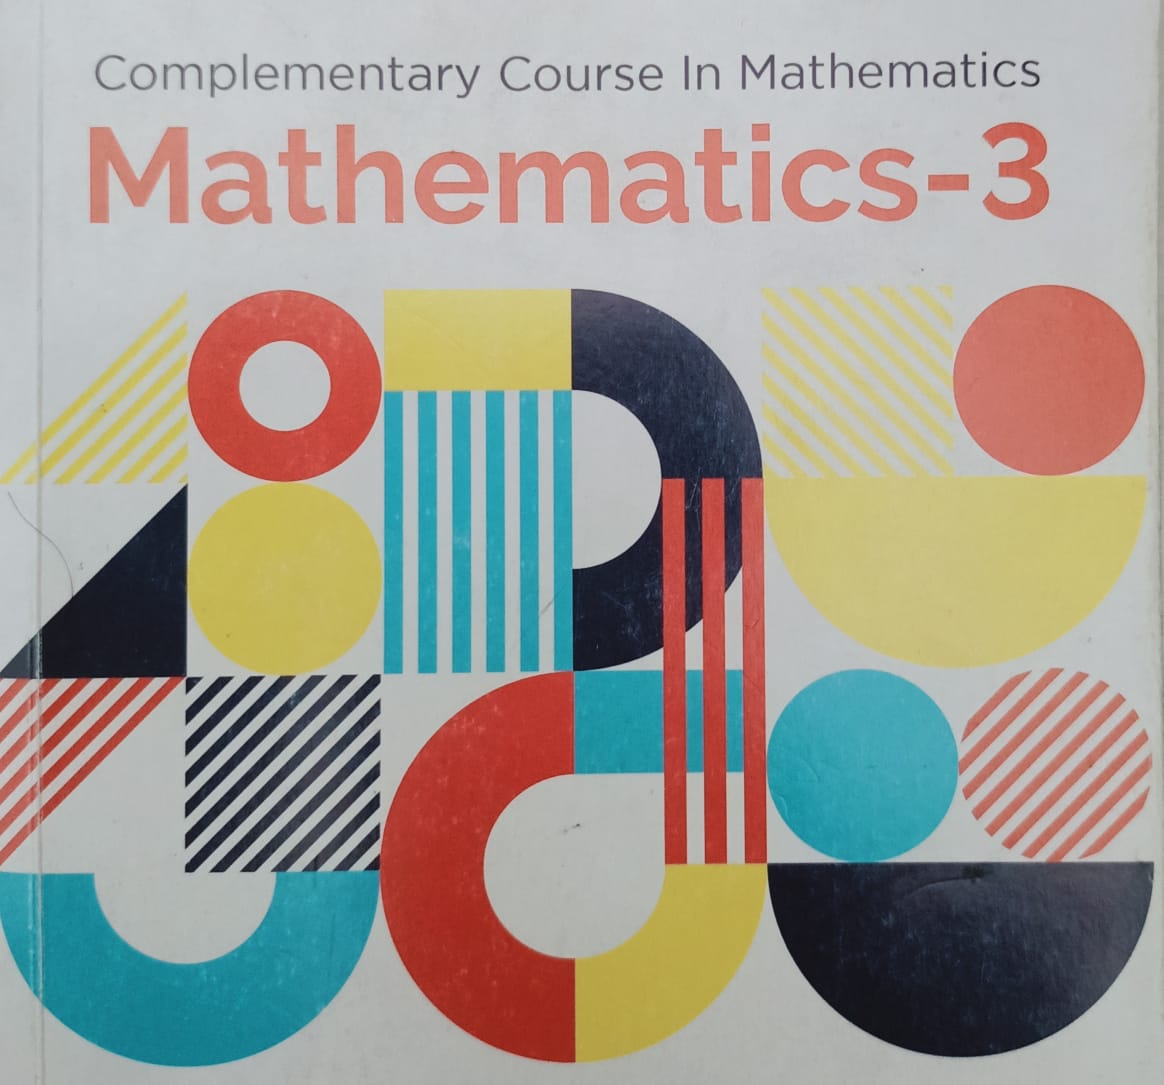 Mathematics-3